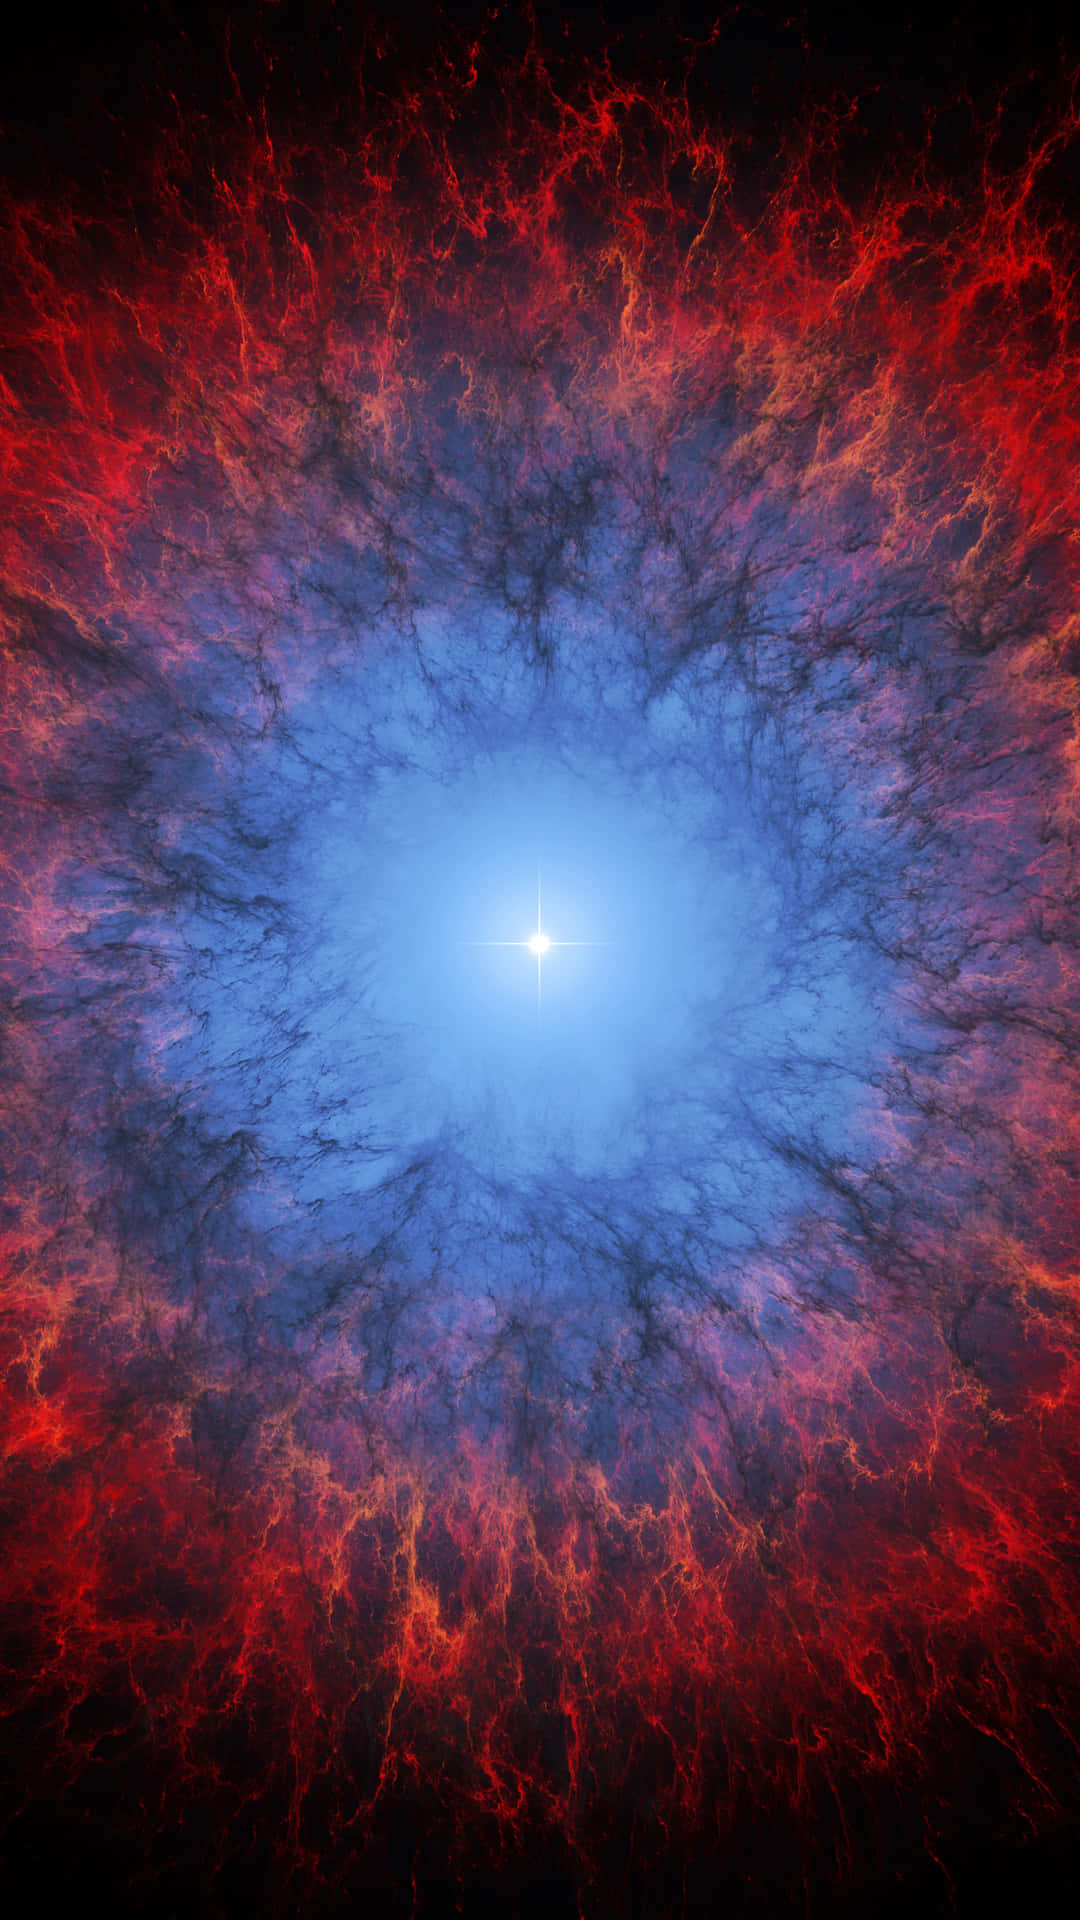 A glimpse into captivating beauty of a supernova